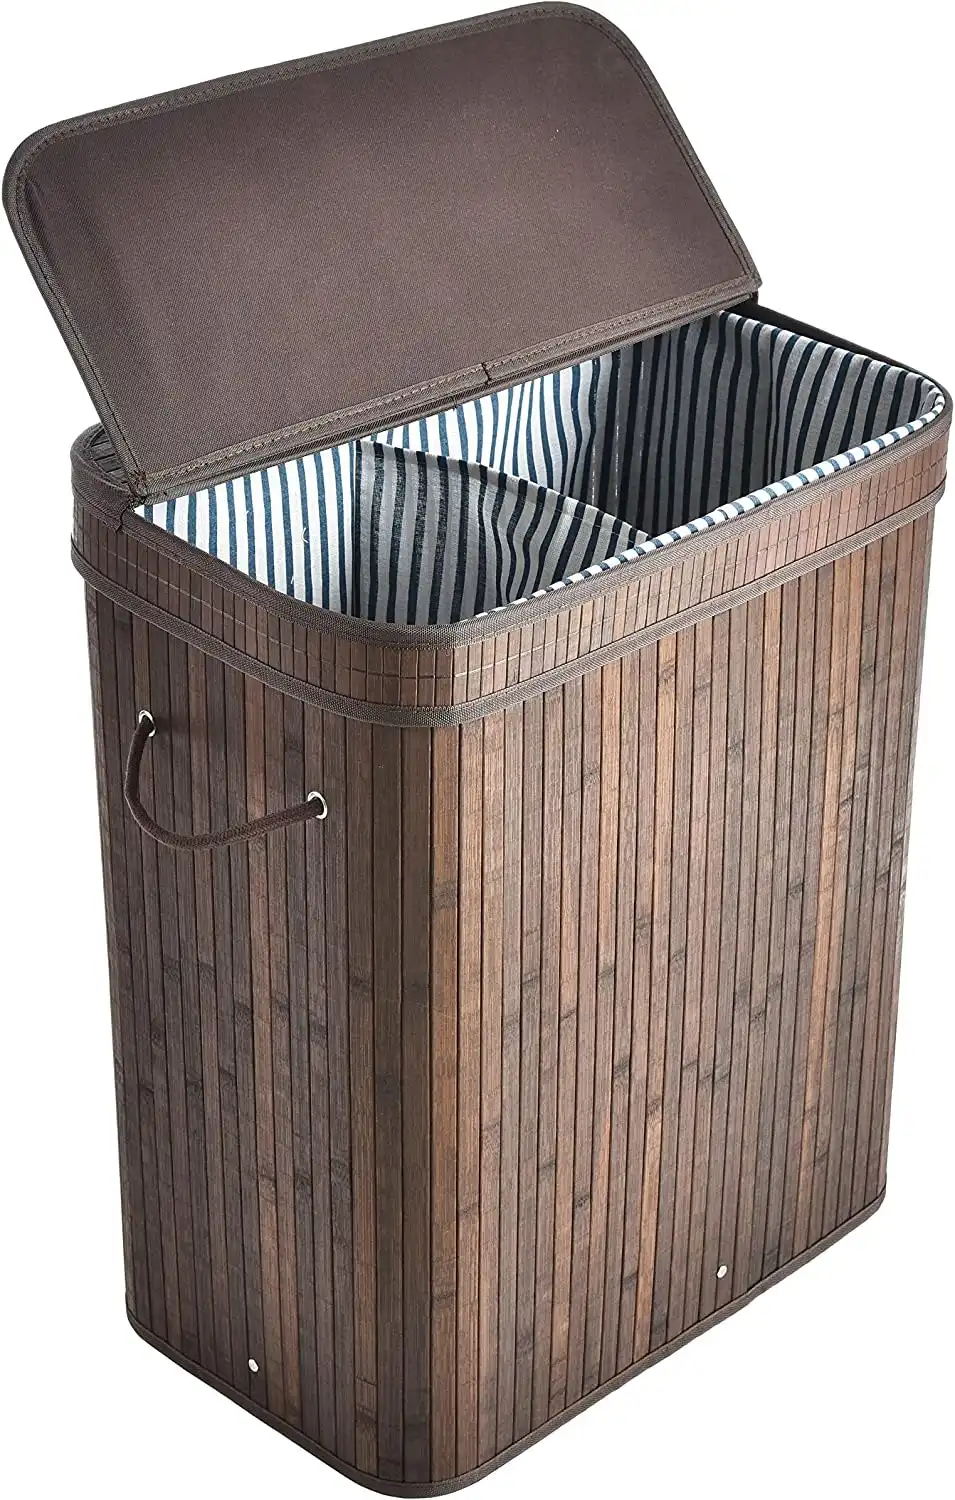 Rectangular Bamboo Laundry Basket with Lid Handles (Dark brown)